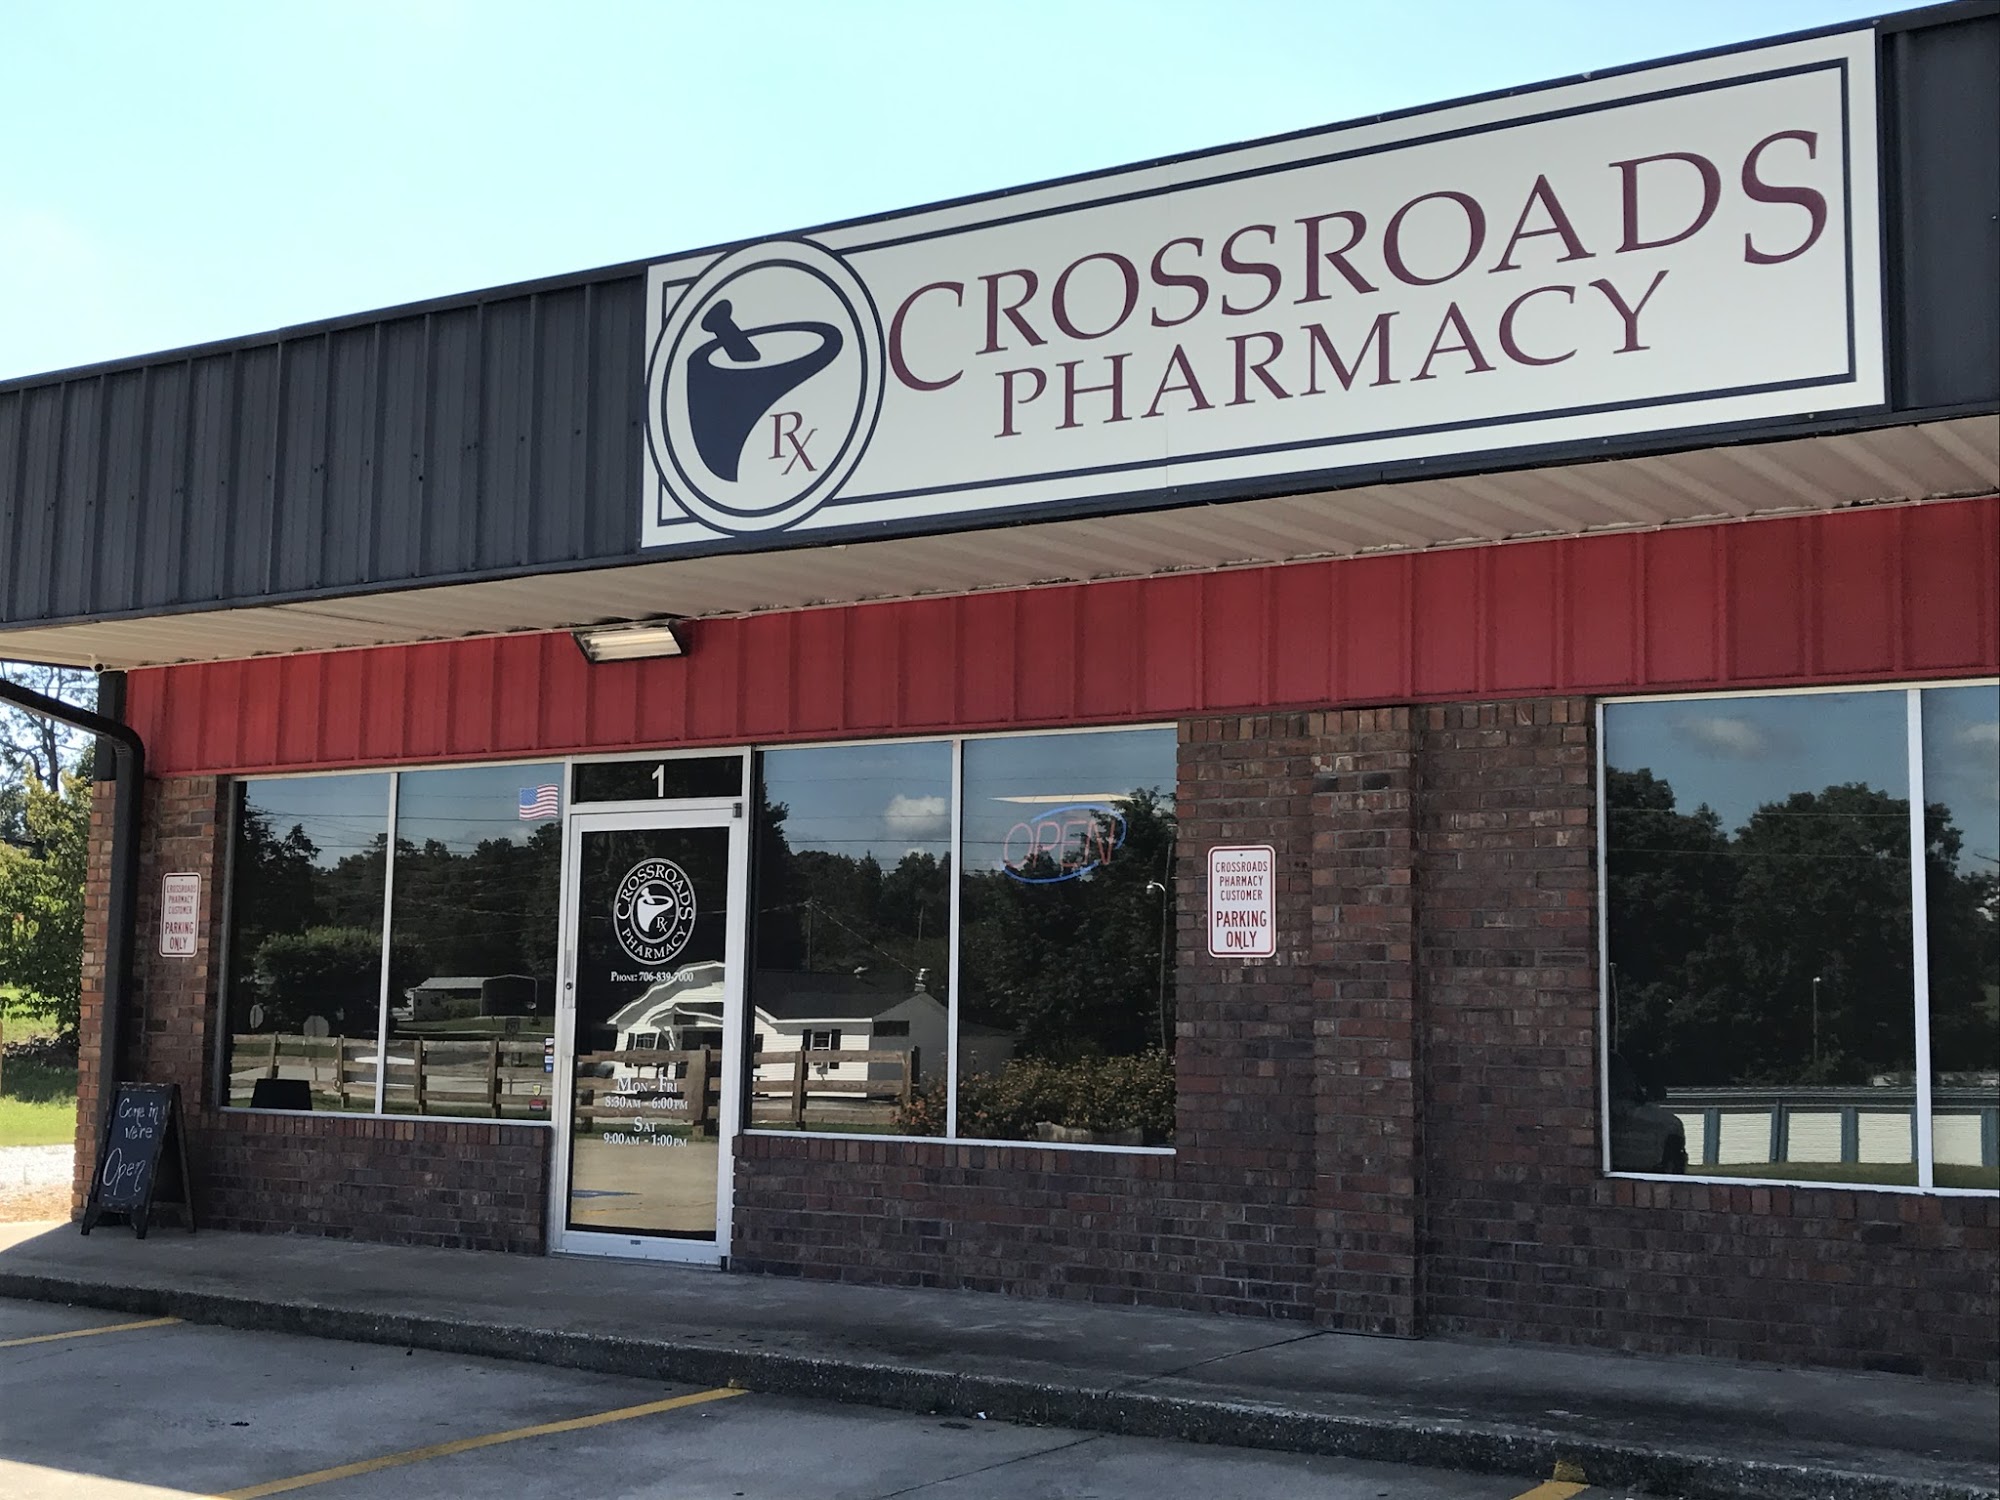 Crossroads Pharmacy